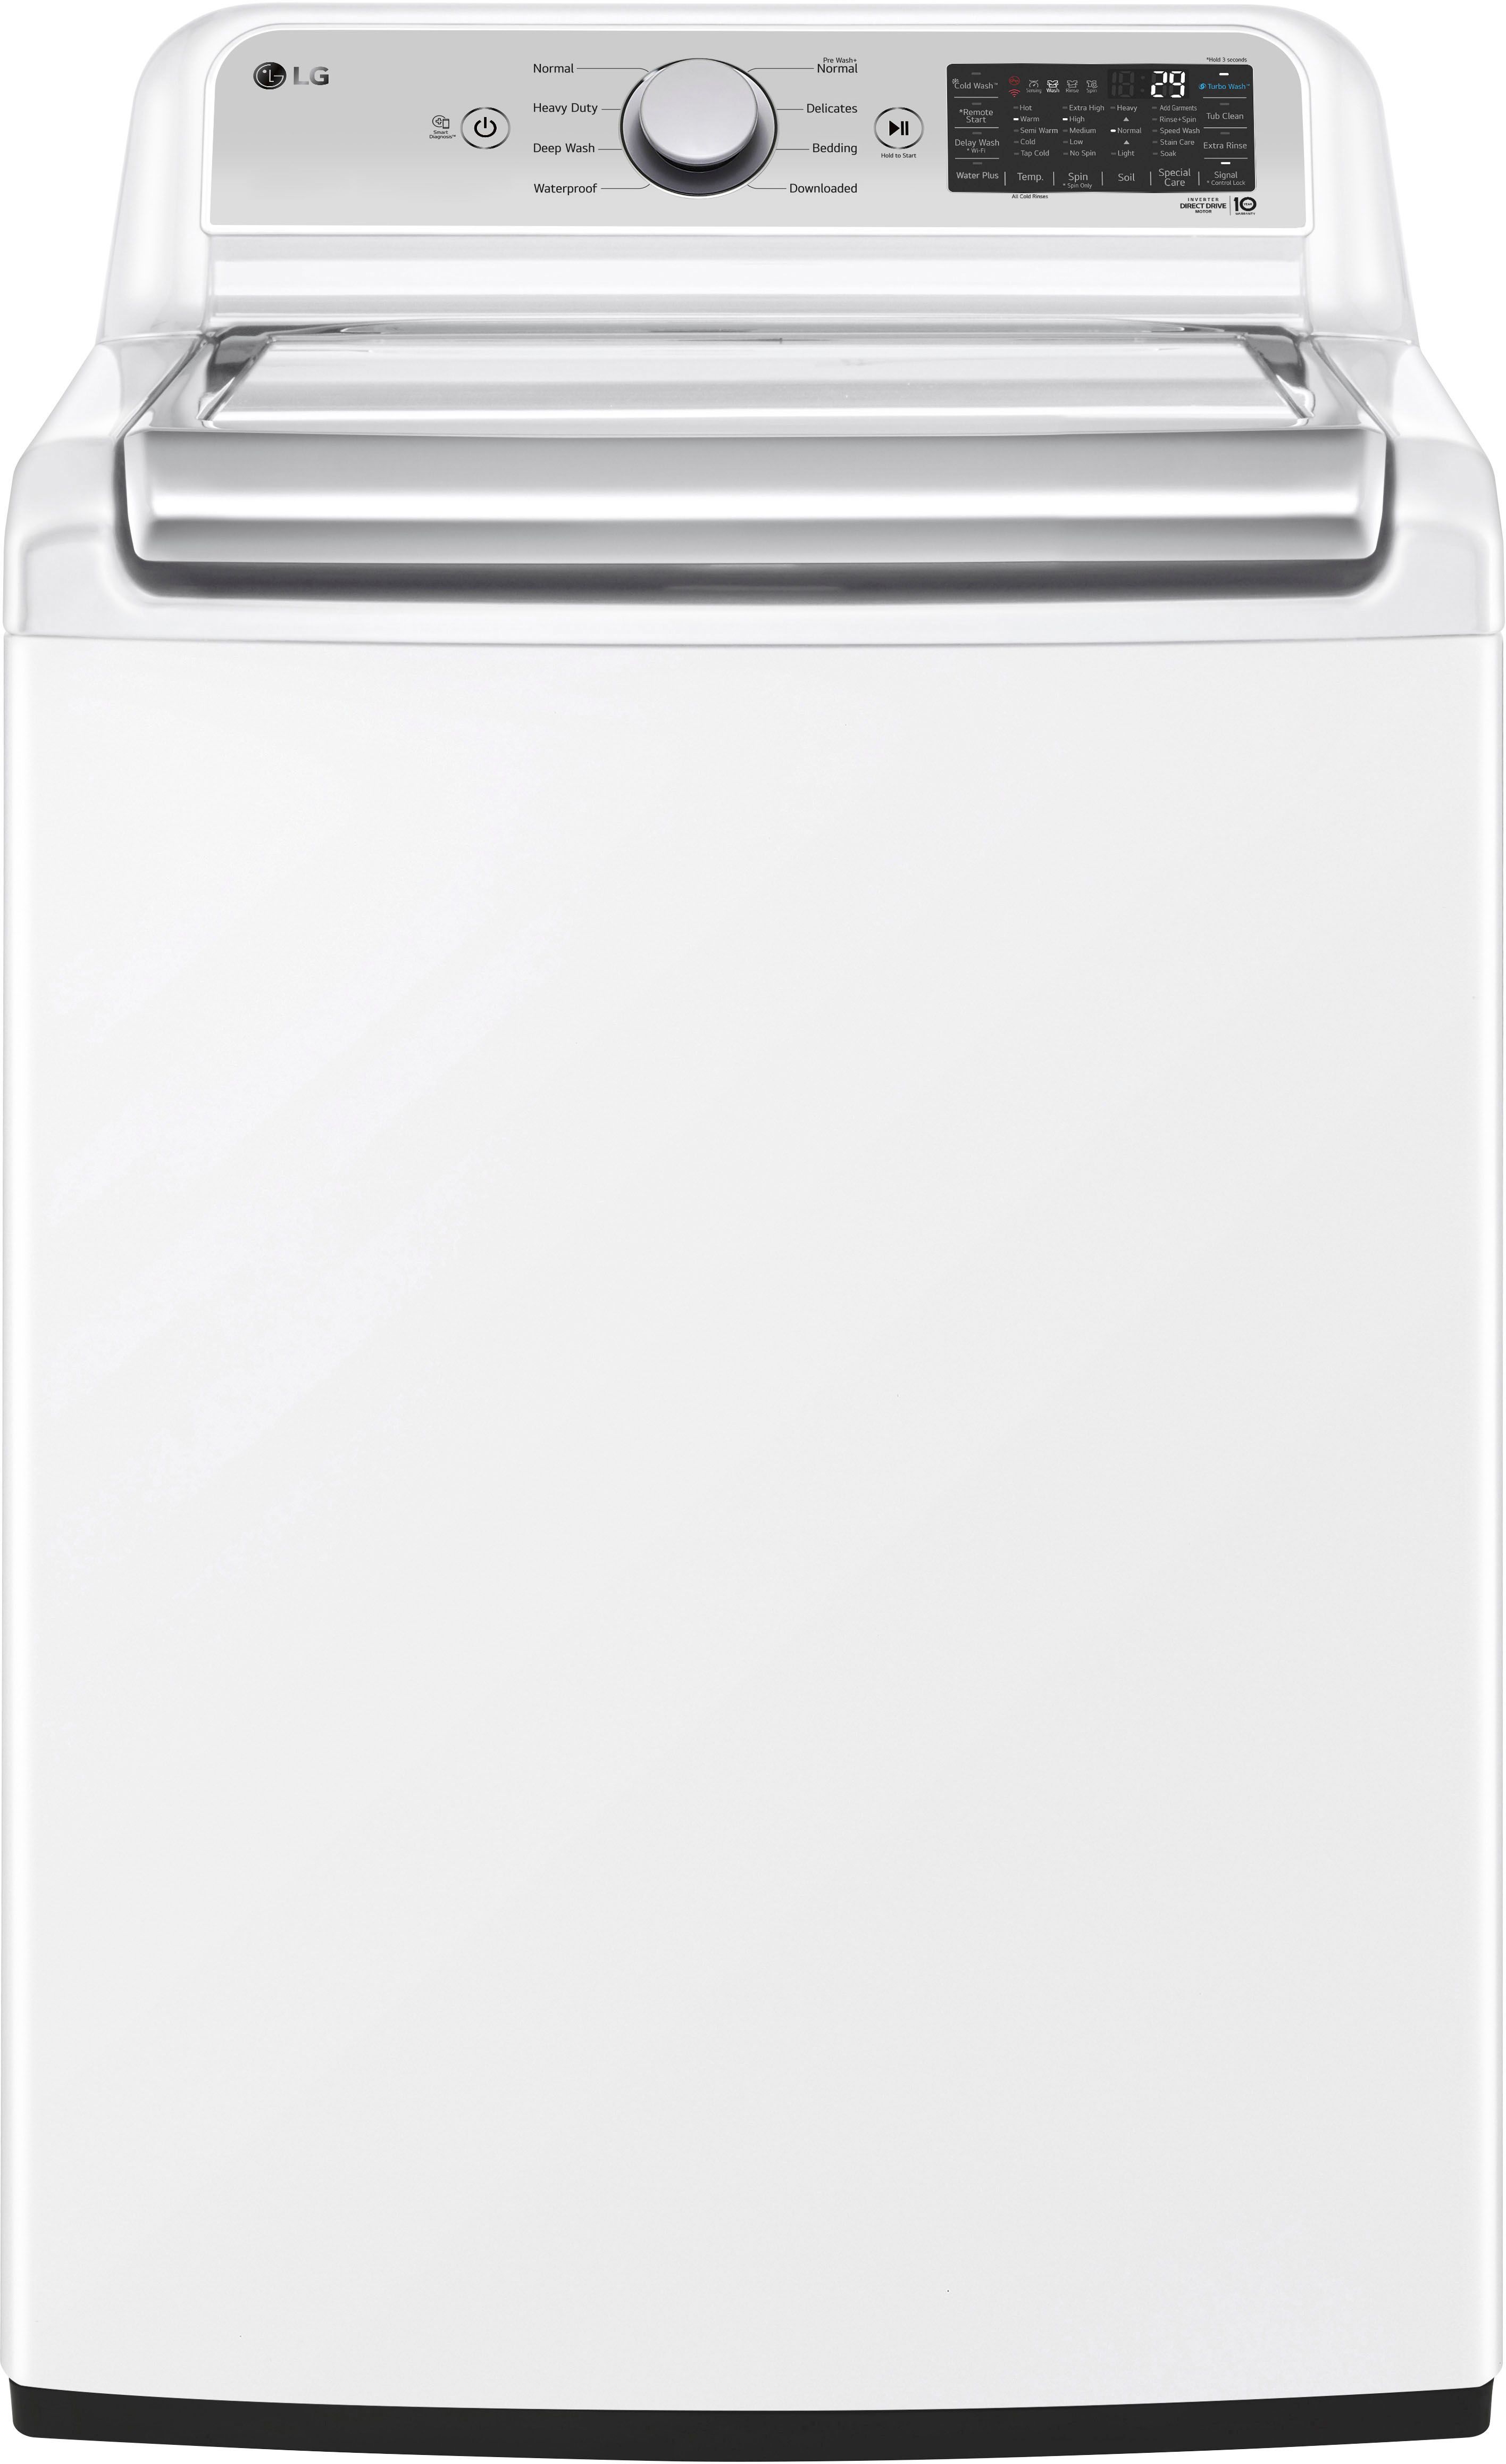 LG 5.5 Cu. Ft. High Efficiency Smart Top Load Washer with TurboWash3D White WT7400CW - Best Buy | Best Buy U.S.